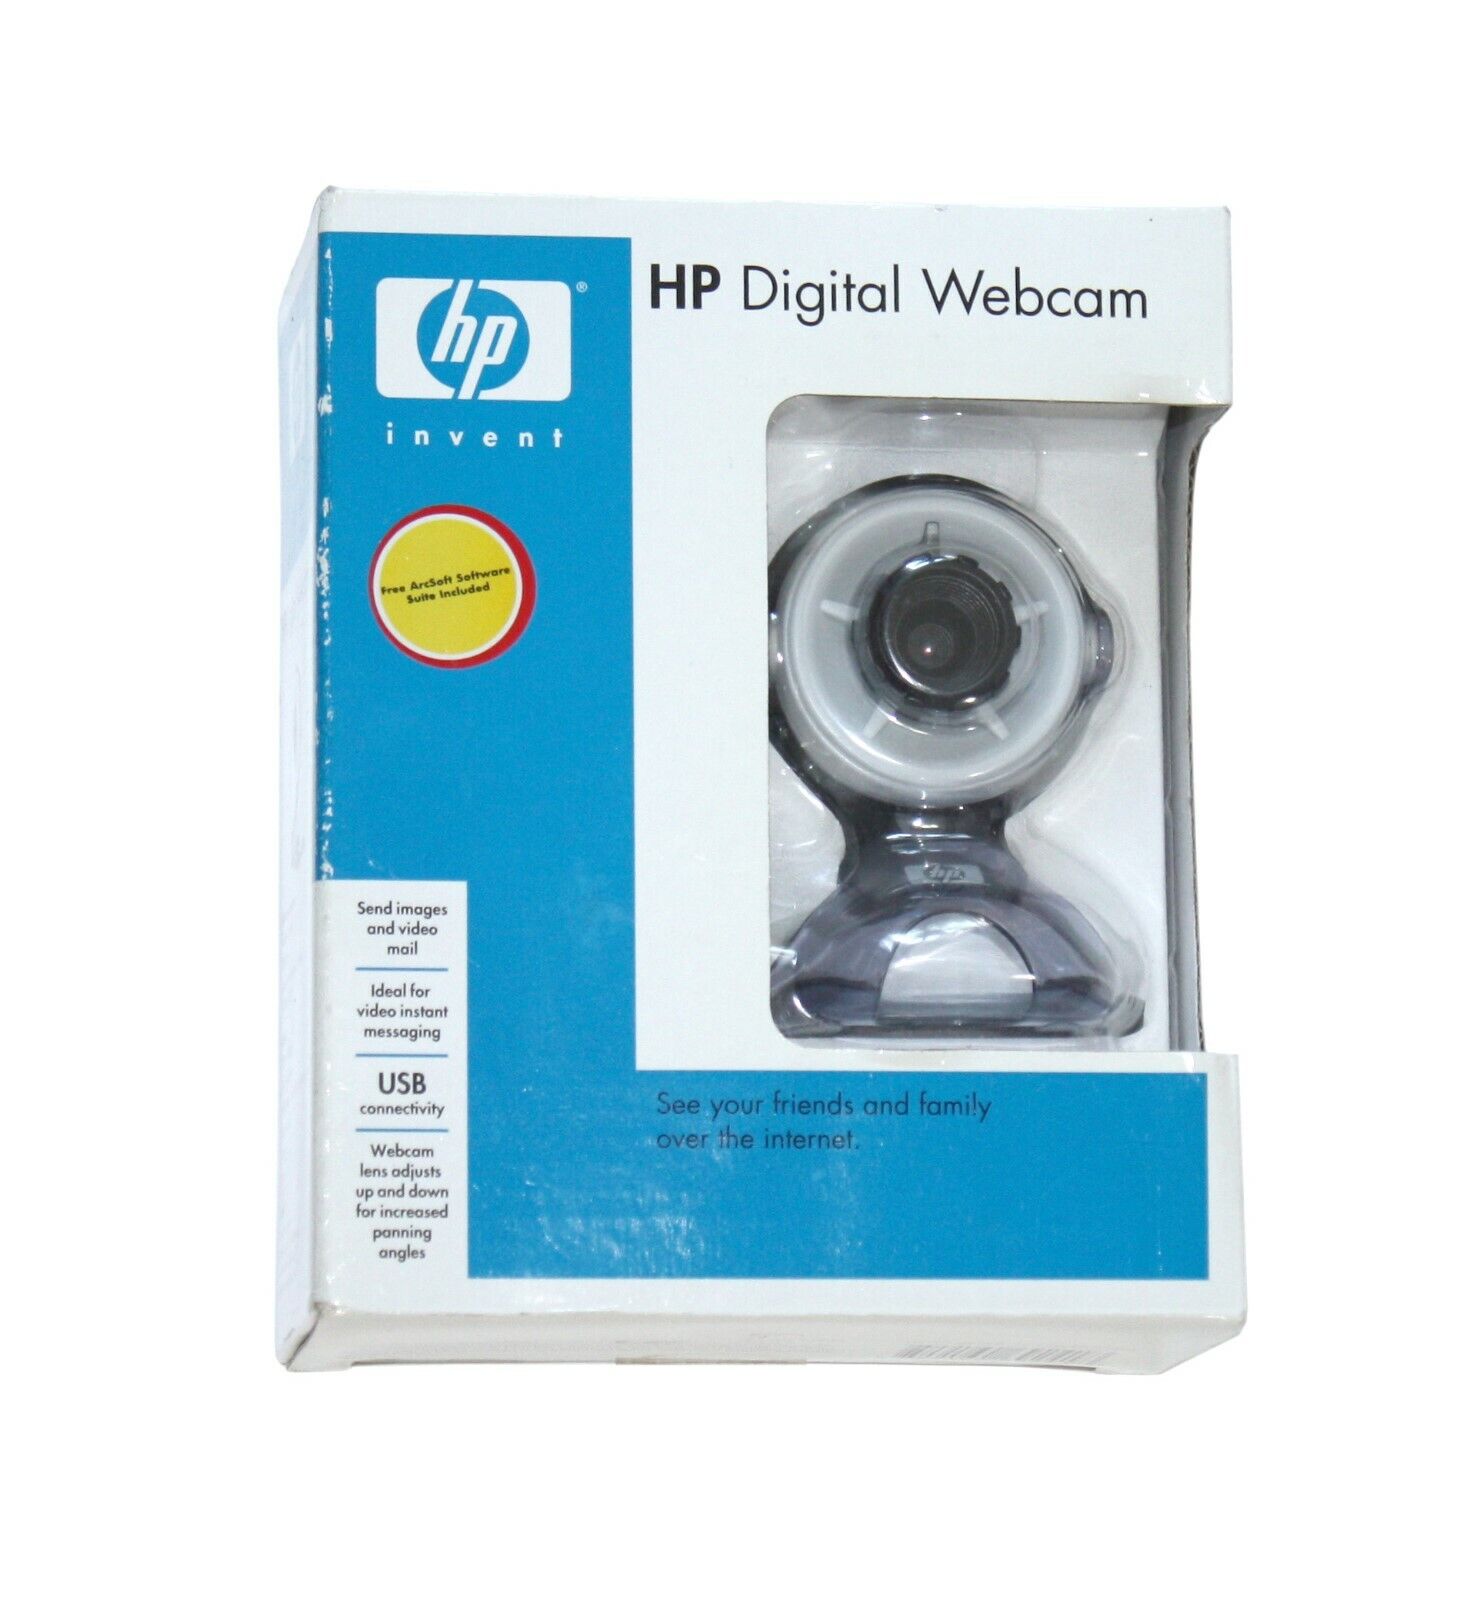 HP Digital Web Cam Sealed in a Box 2005 Vintage